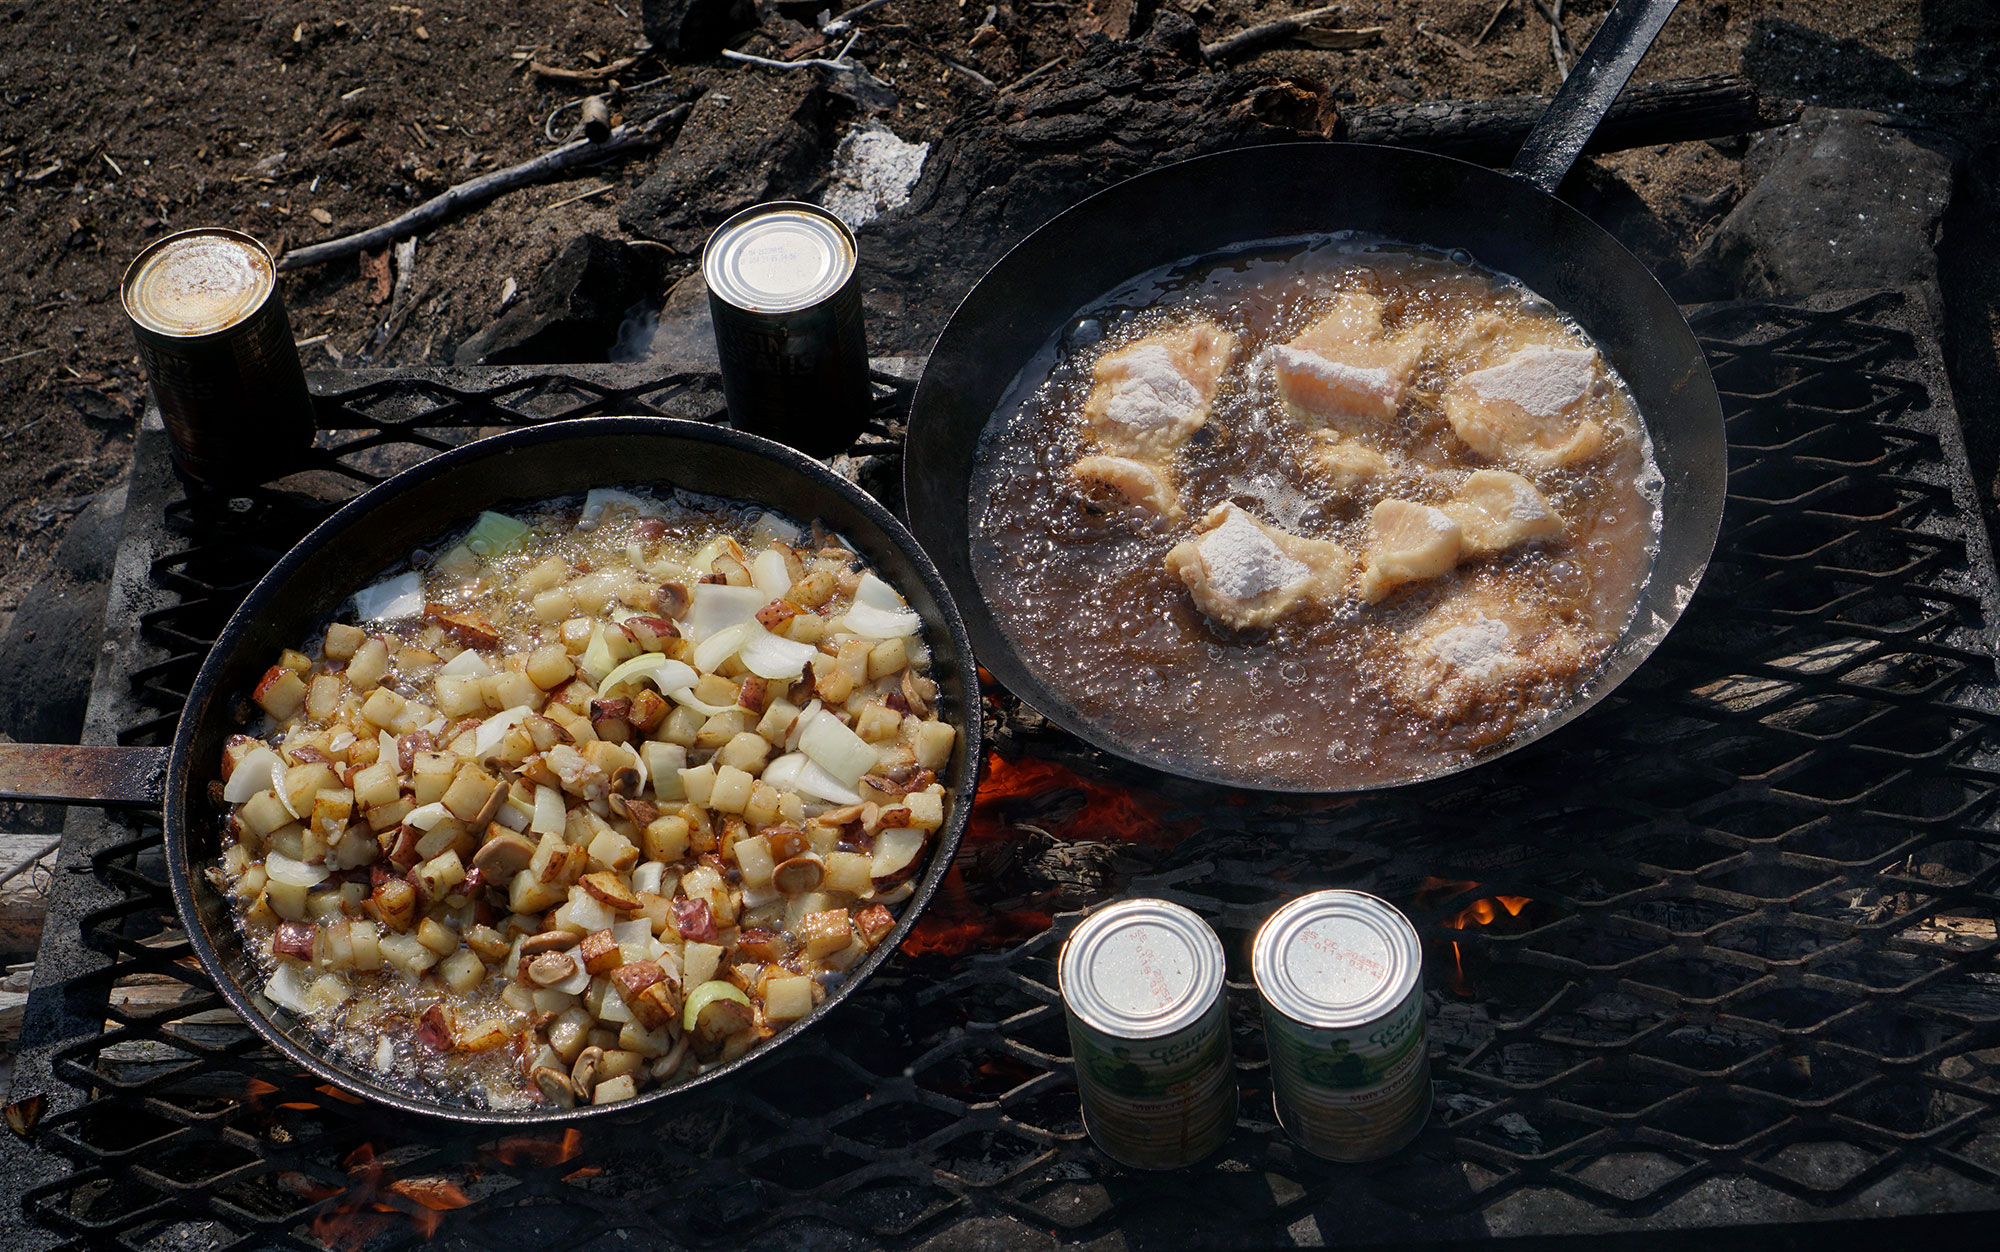 https://www.outdoorlife.com/wp-content/uploads/2023/11/17/Camping-food-ideas.jpg